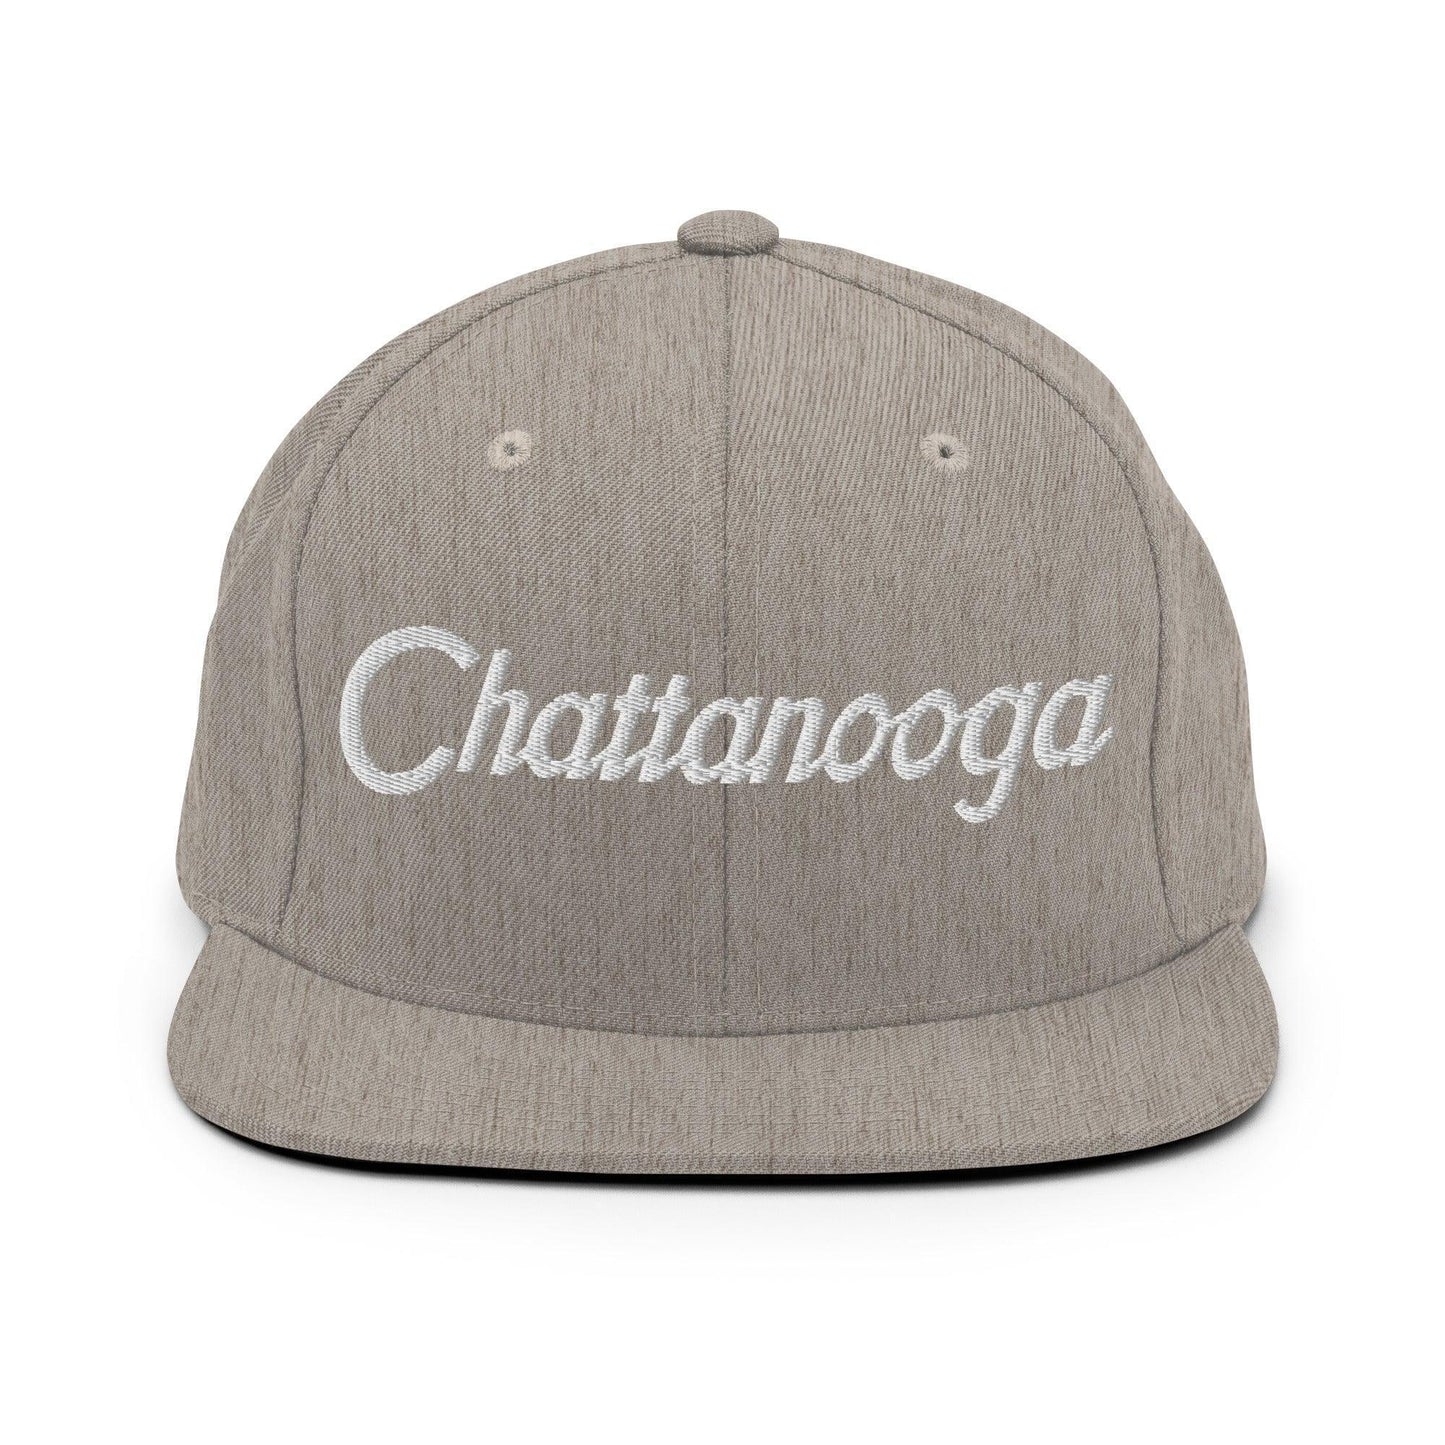 Chattanooga Script Snapback Hat Heather Grey